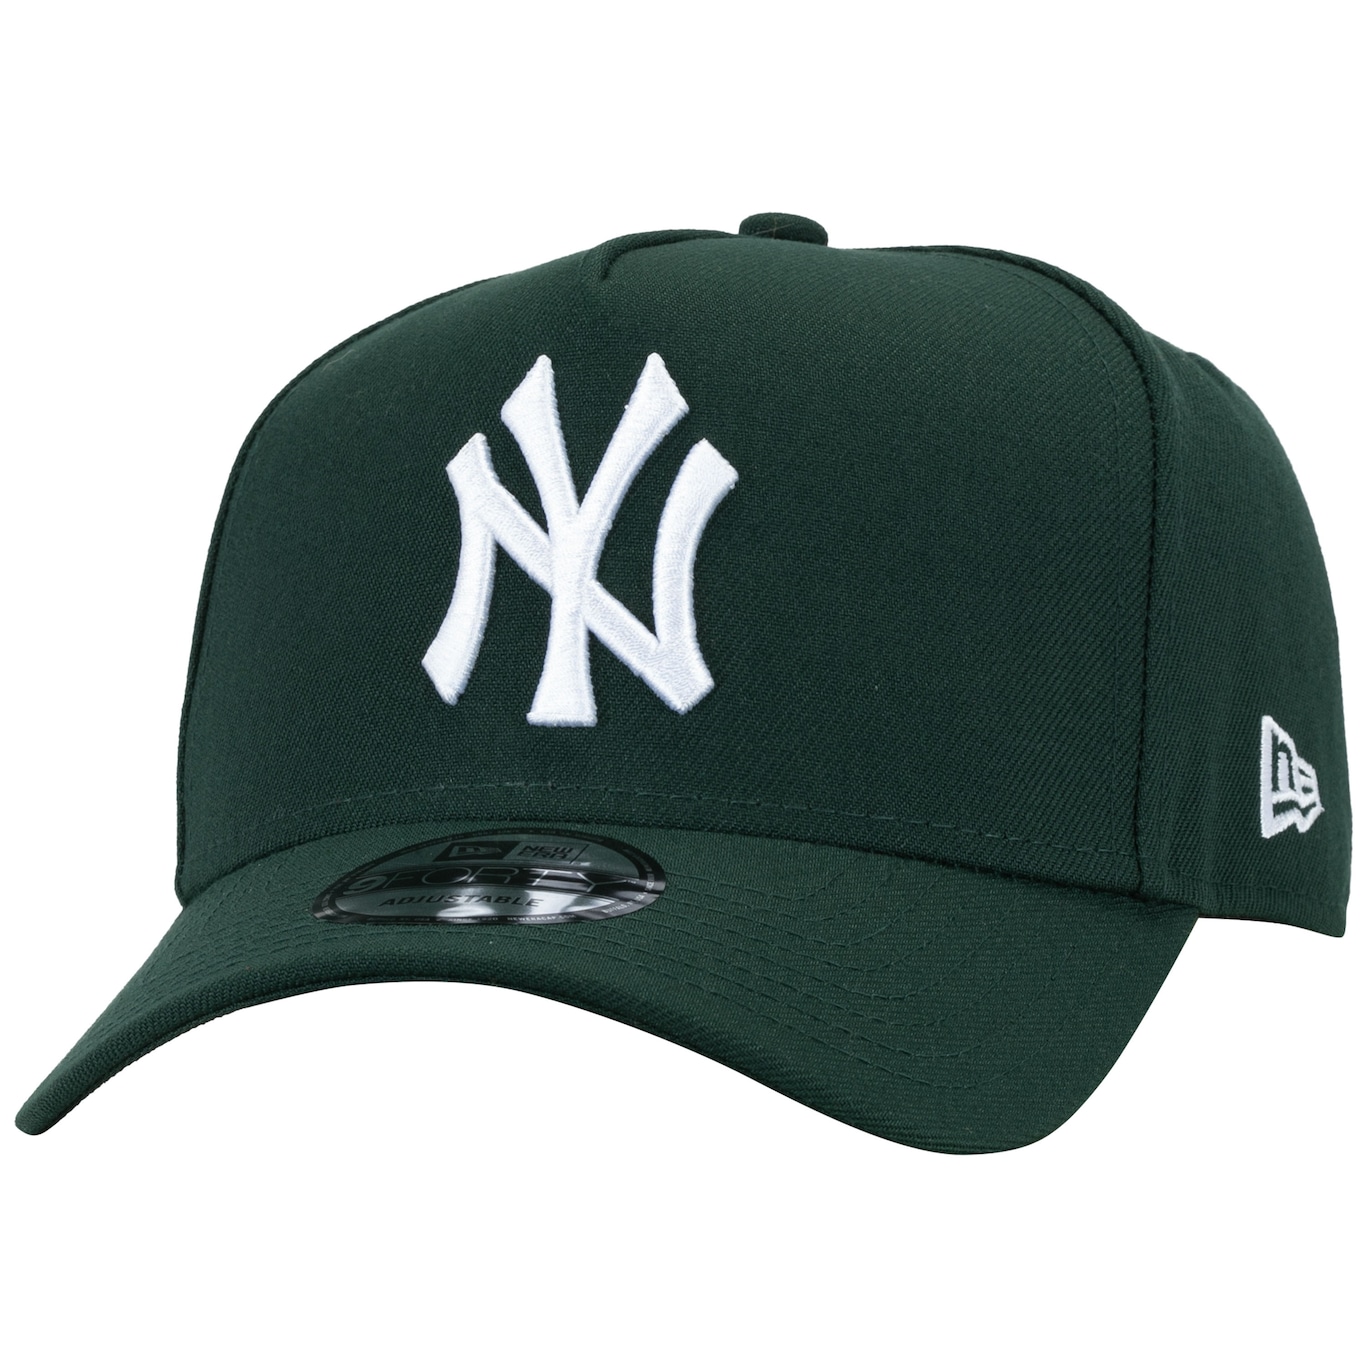 Boné New York Yankees Aba Curva Snapback 940 Veranito - Adulto - Foto 1